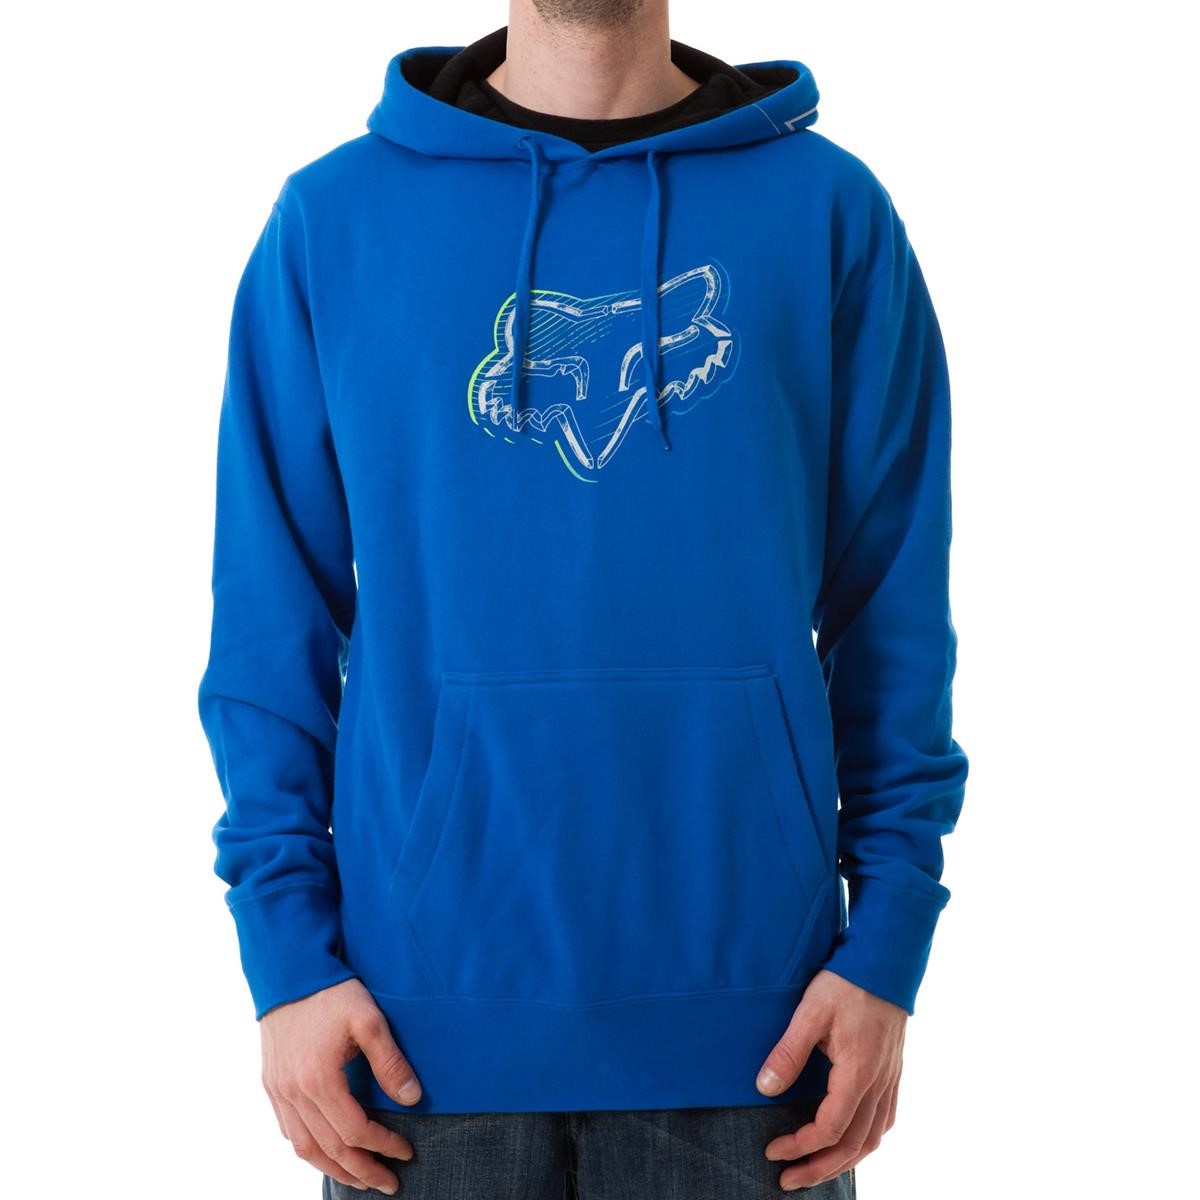 Freizeit/Streetwear Bekleidung-Hoodies - Fox Hoody Moonlight Blue